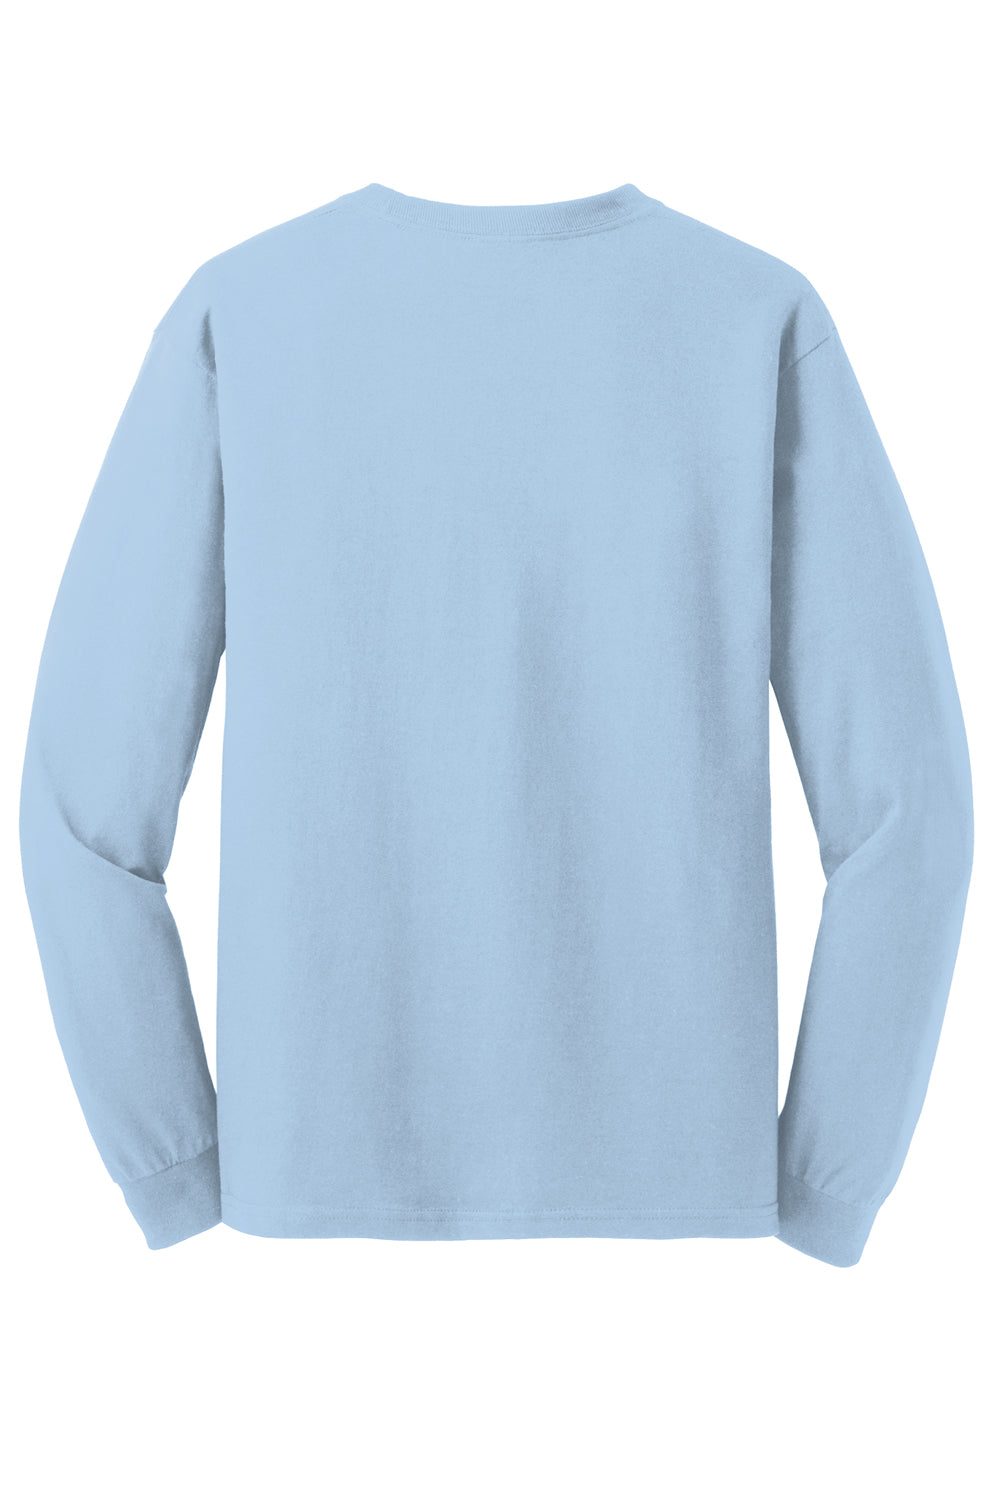 Gildan Mens Long Sleeve Crewneck T-Shirt Light Blue Flat Back